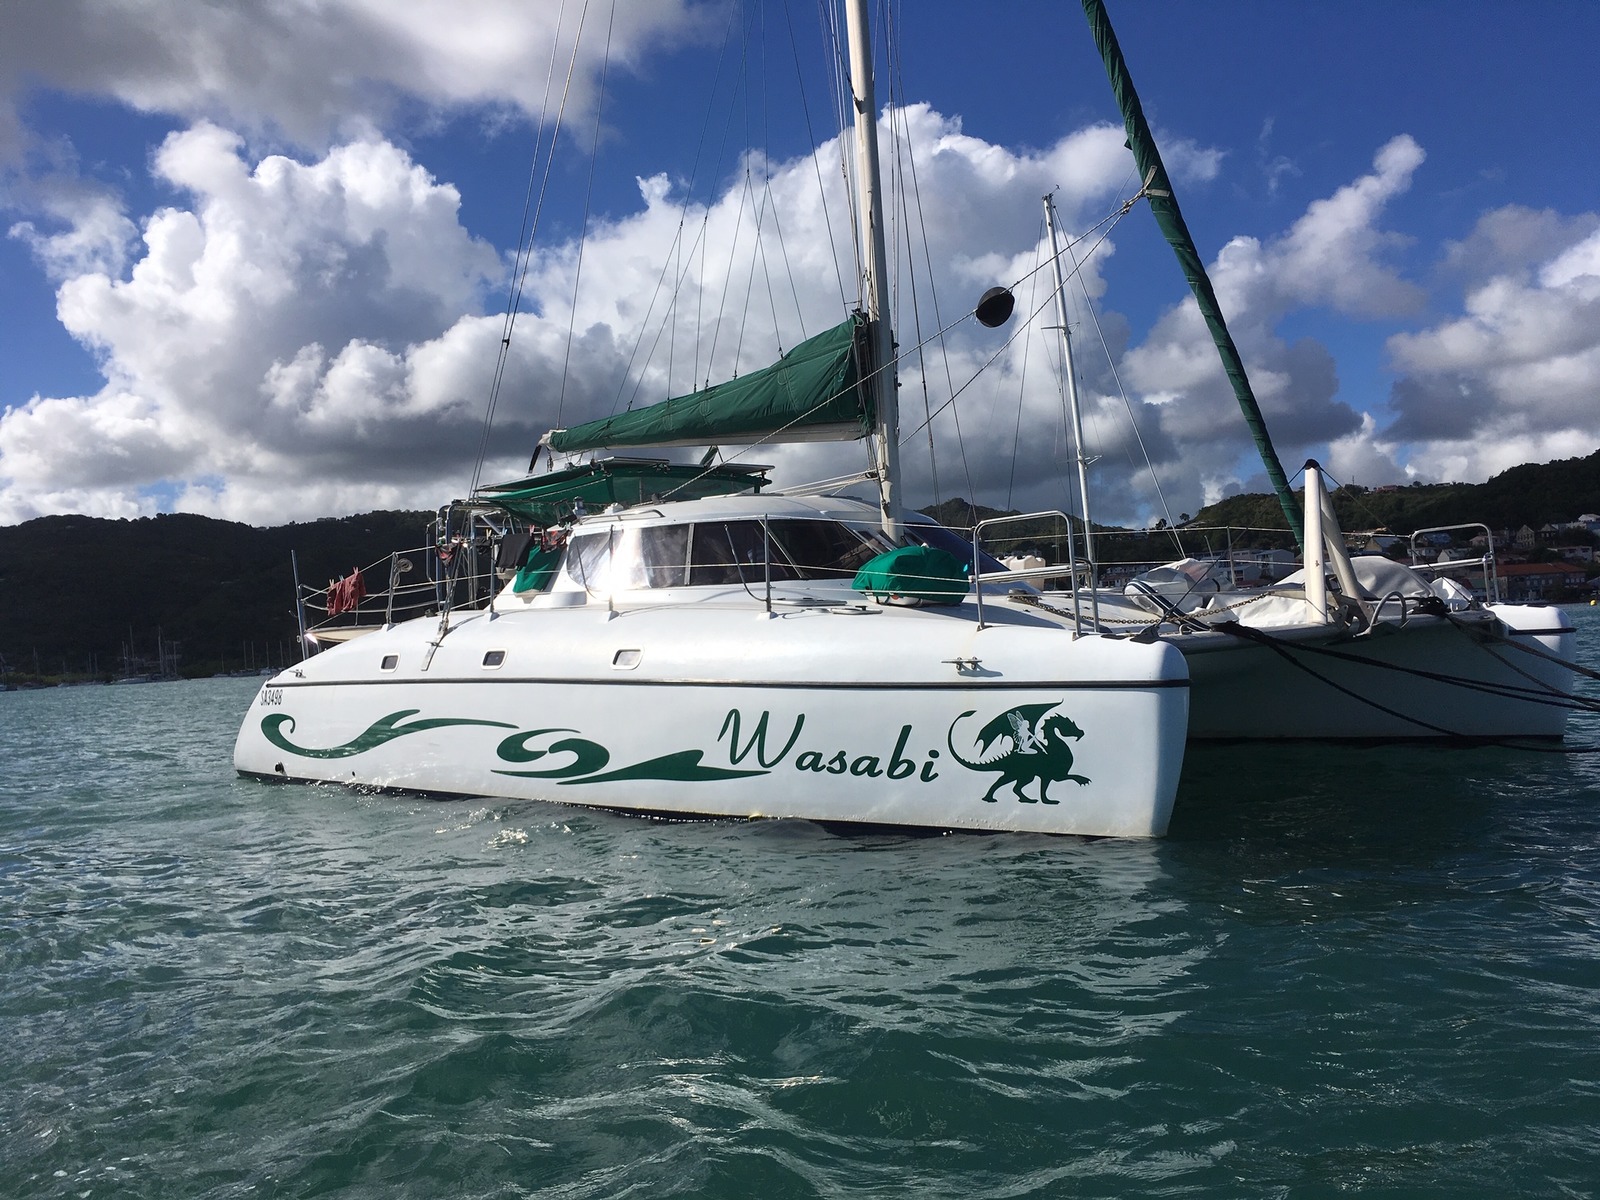 wildcat 350 catamaran for sale